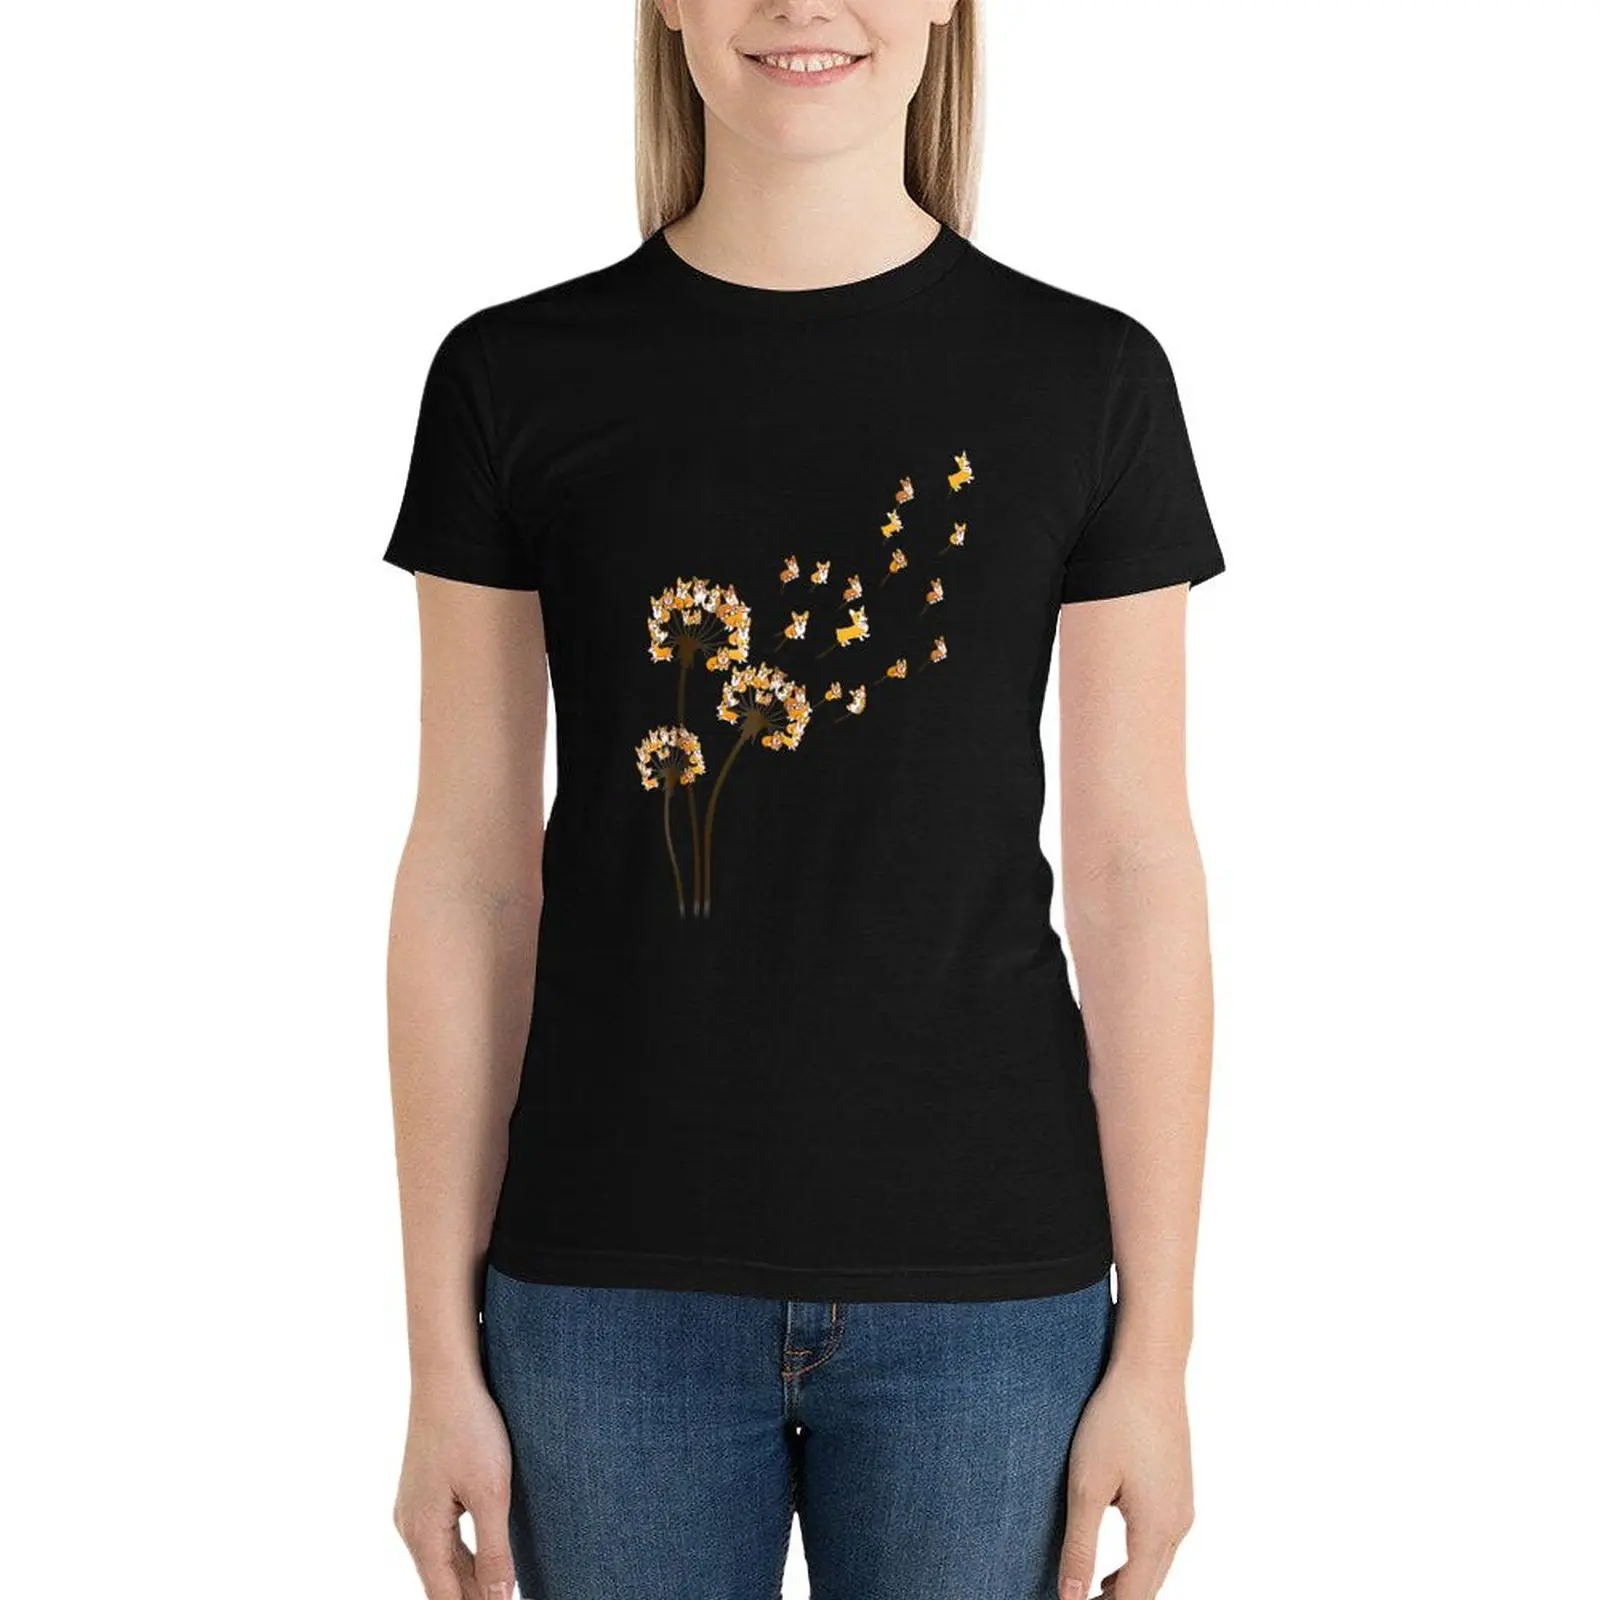 

Corgi Flower Fly Dandelion Funny Dog Lover, Cute Corgi T-Shirt tops graphics lady clothes t shirts for Women graphic